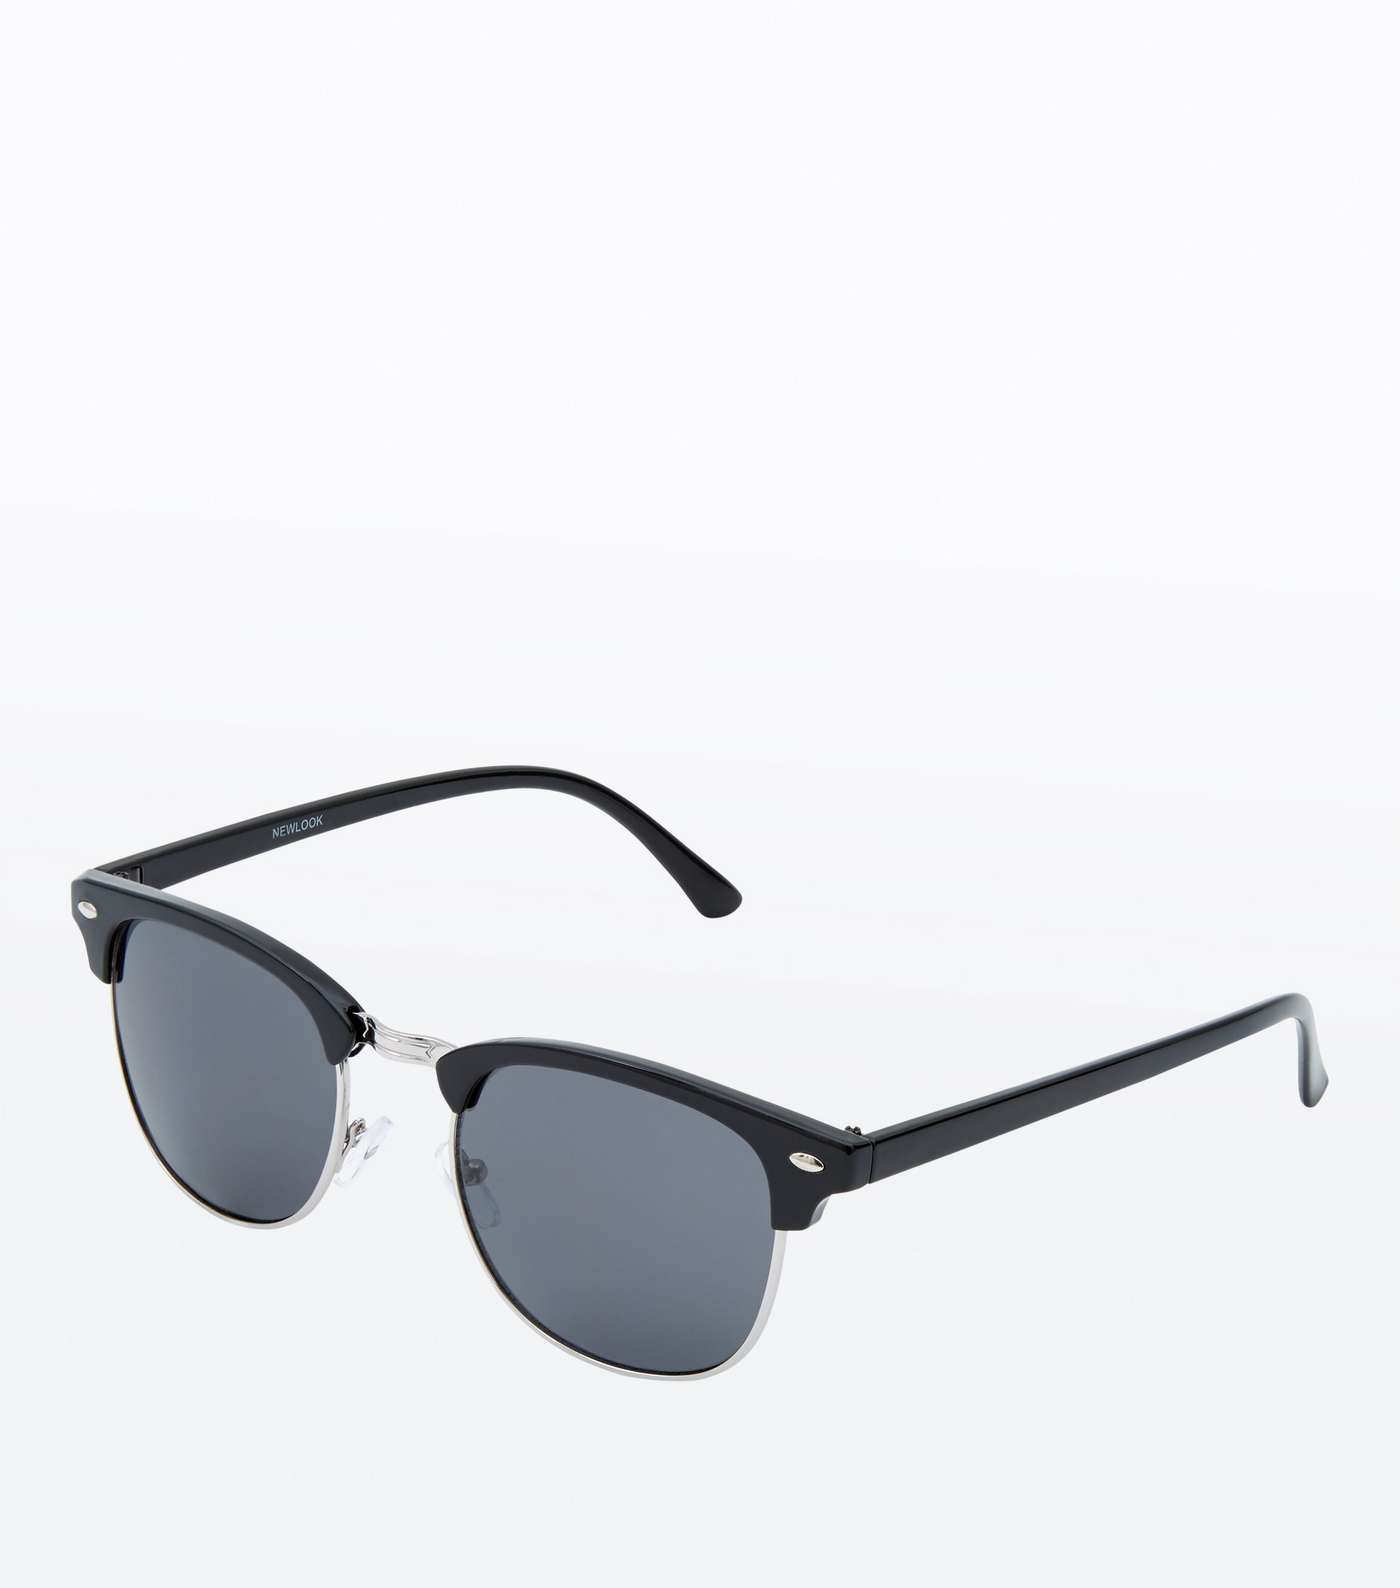 Black Smoke Tinted Lens Sunglasses